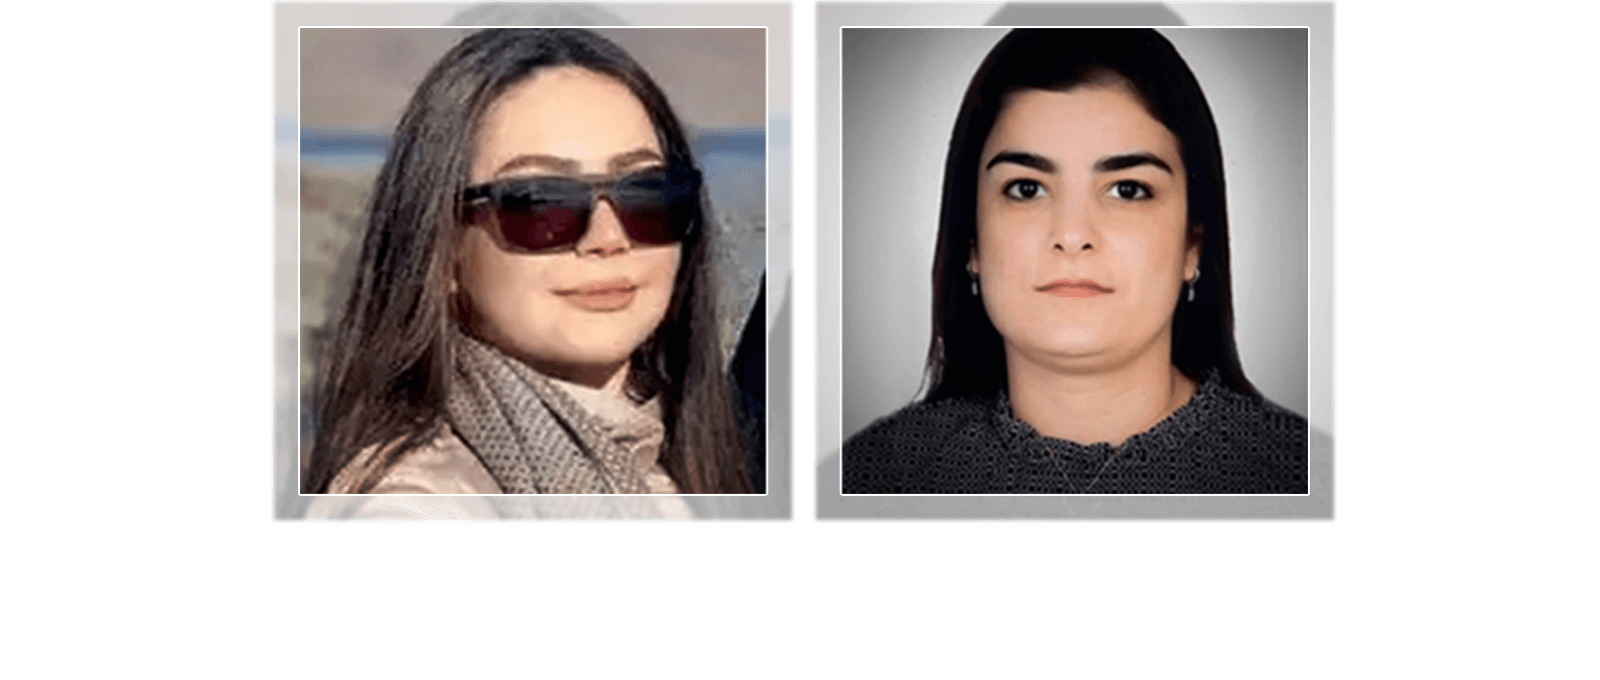 Photos showing "Baran” Maryam Nuri Mohamed Amin and Mhabad Ahmad Ali